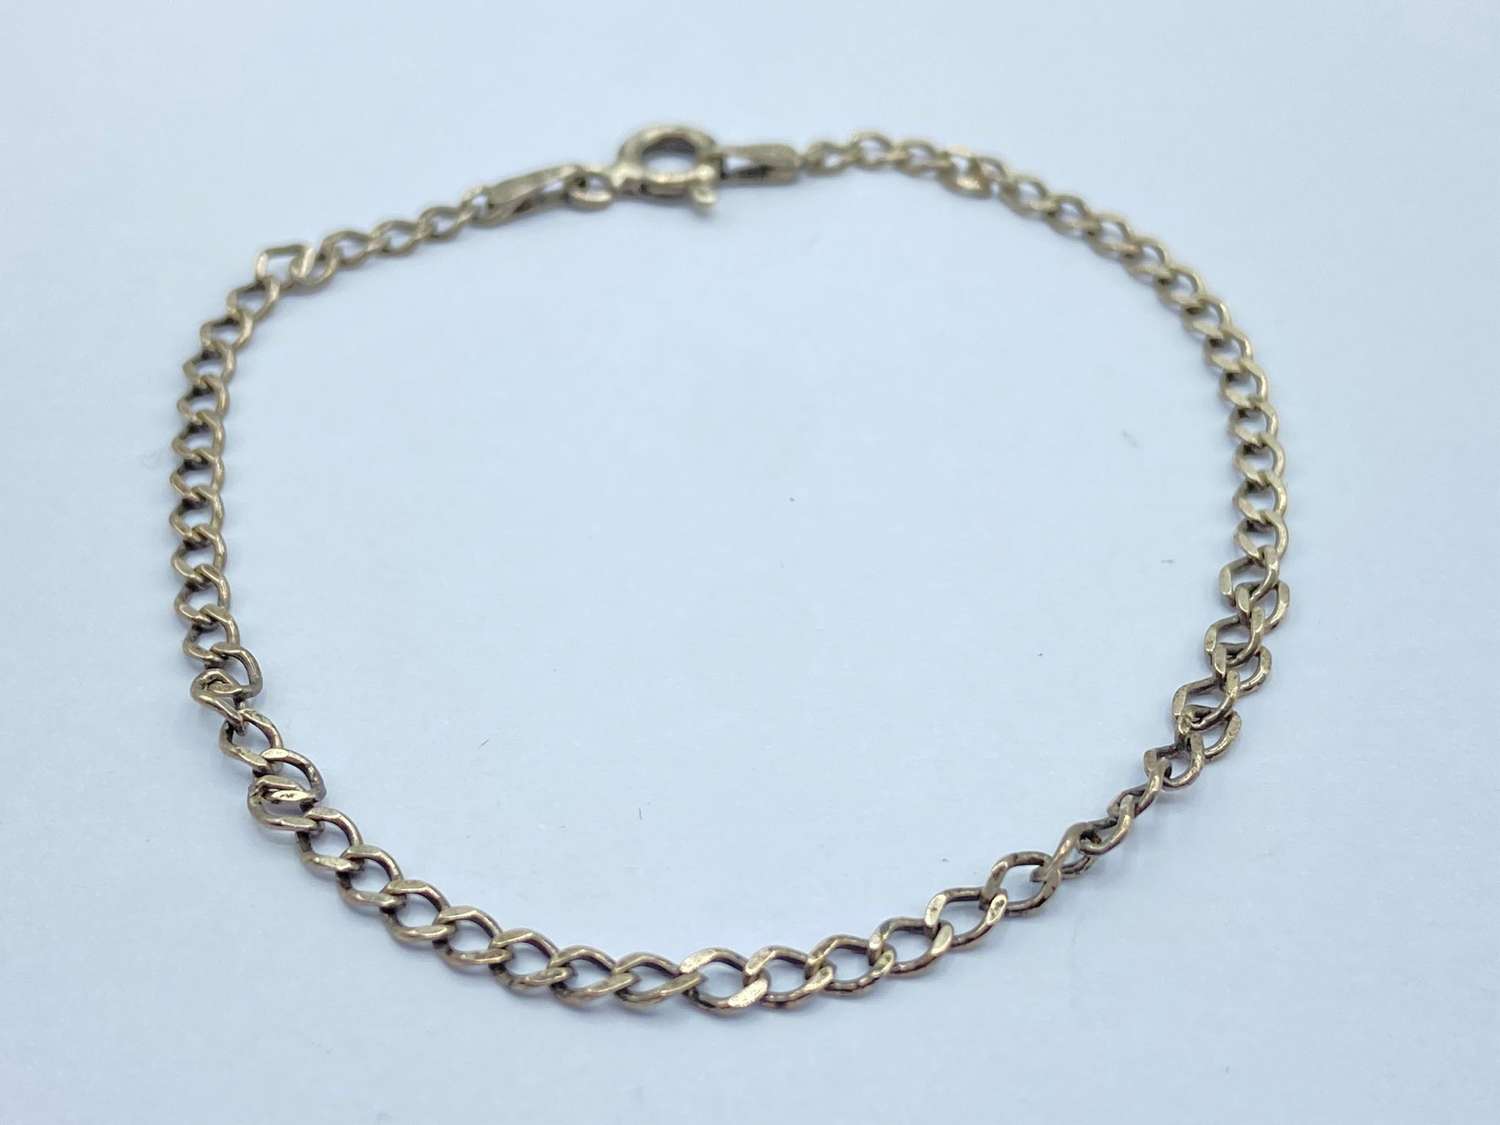 Vintage Simplistic Sterling Silver 925 Marked Curb Chain Bracelet